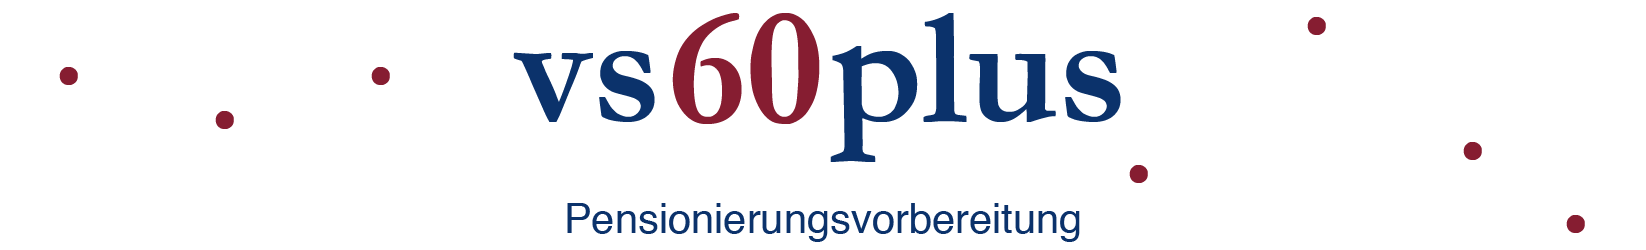 logo vs60plus